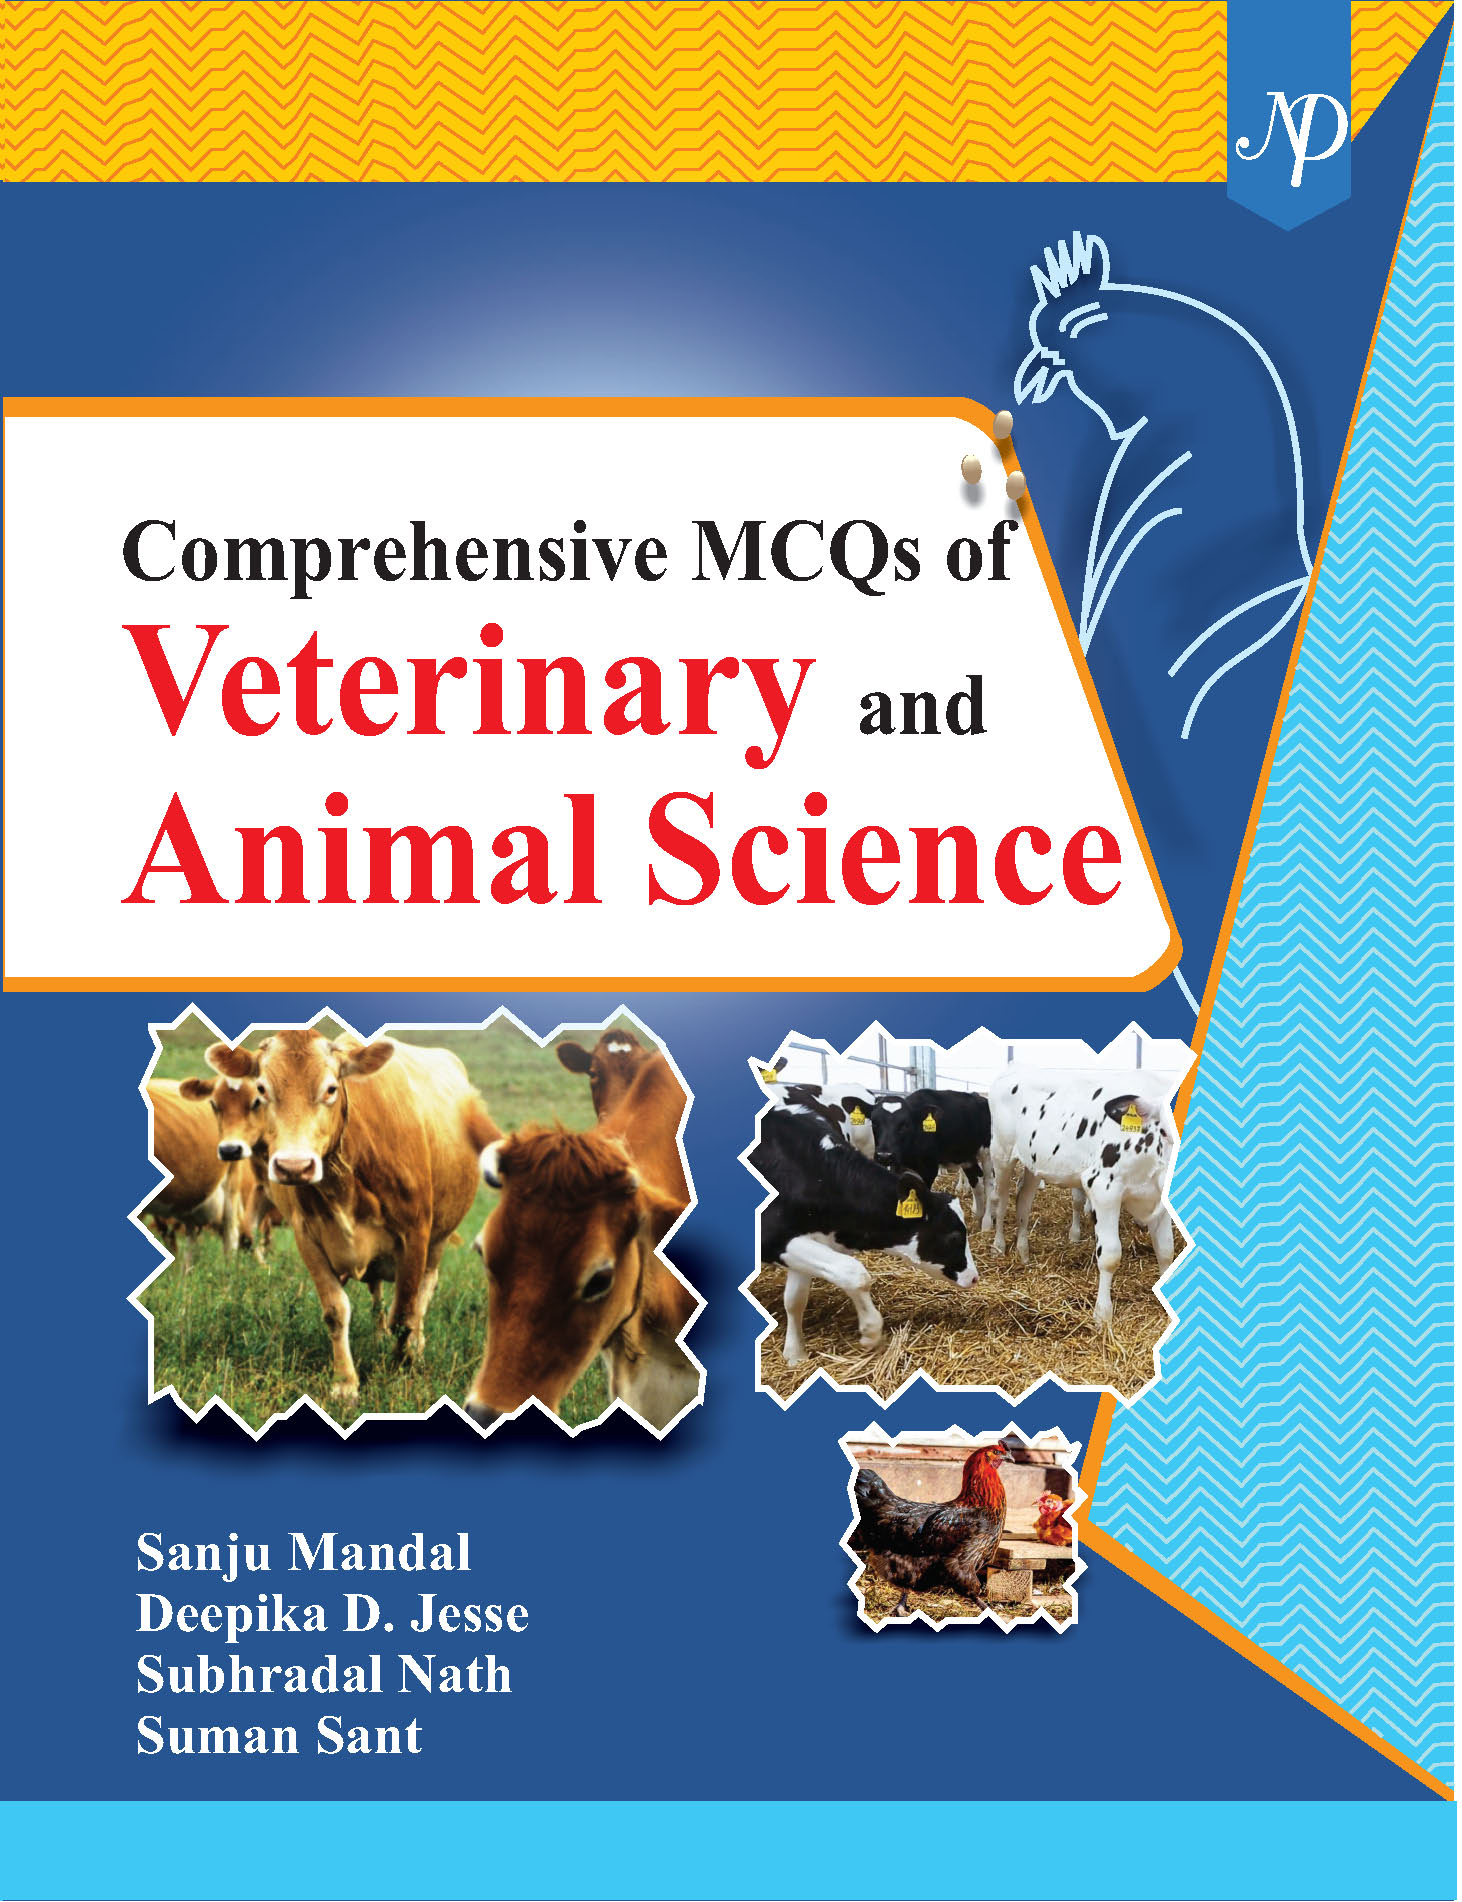 Comprehensive MCQs of Veterinary Sciences Cover.jpg